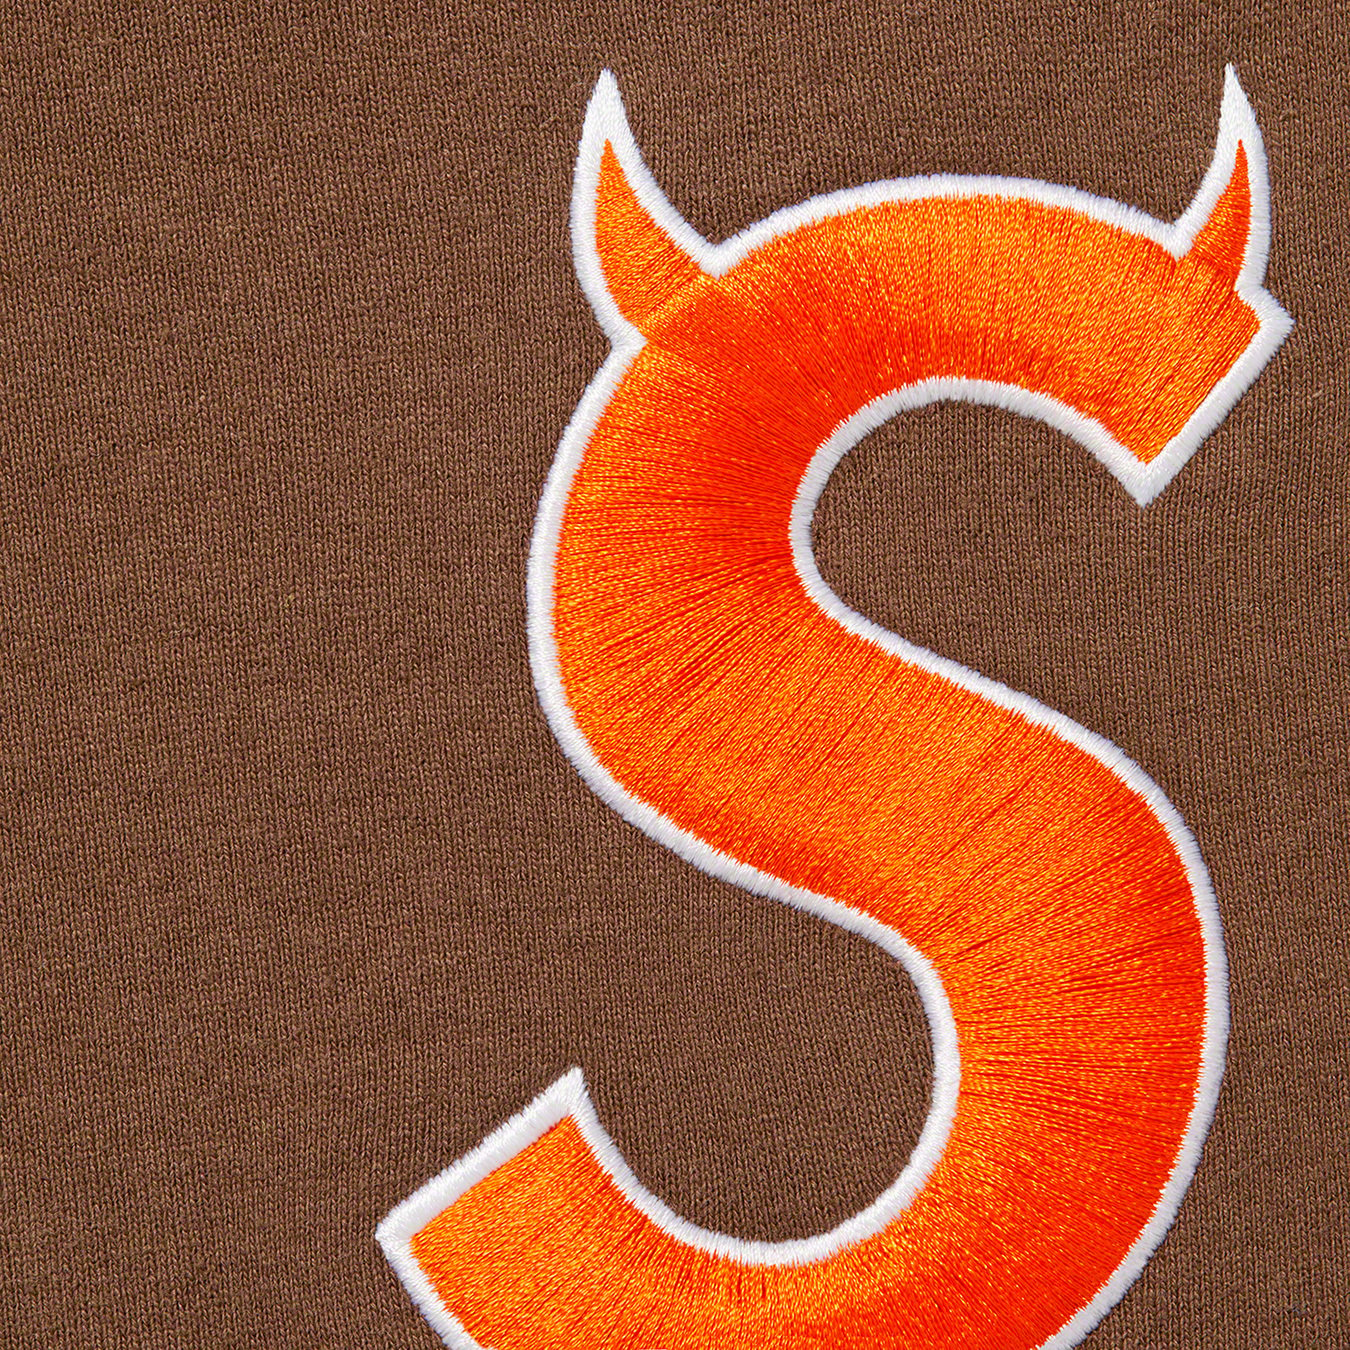 S Logo Hooded Sweatshirt - fall winter 2020 - Supreme